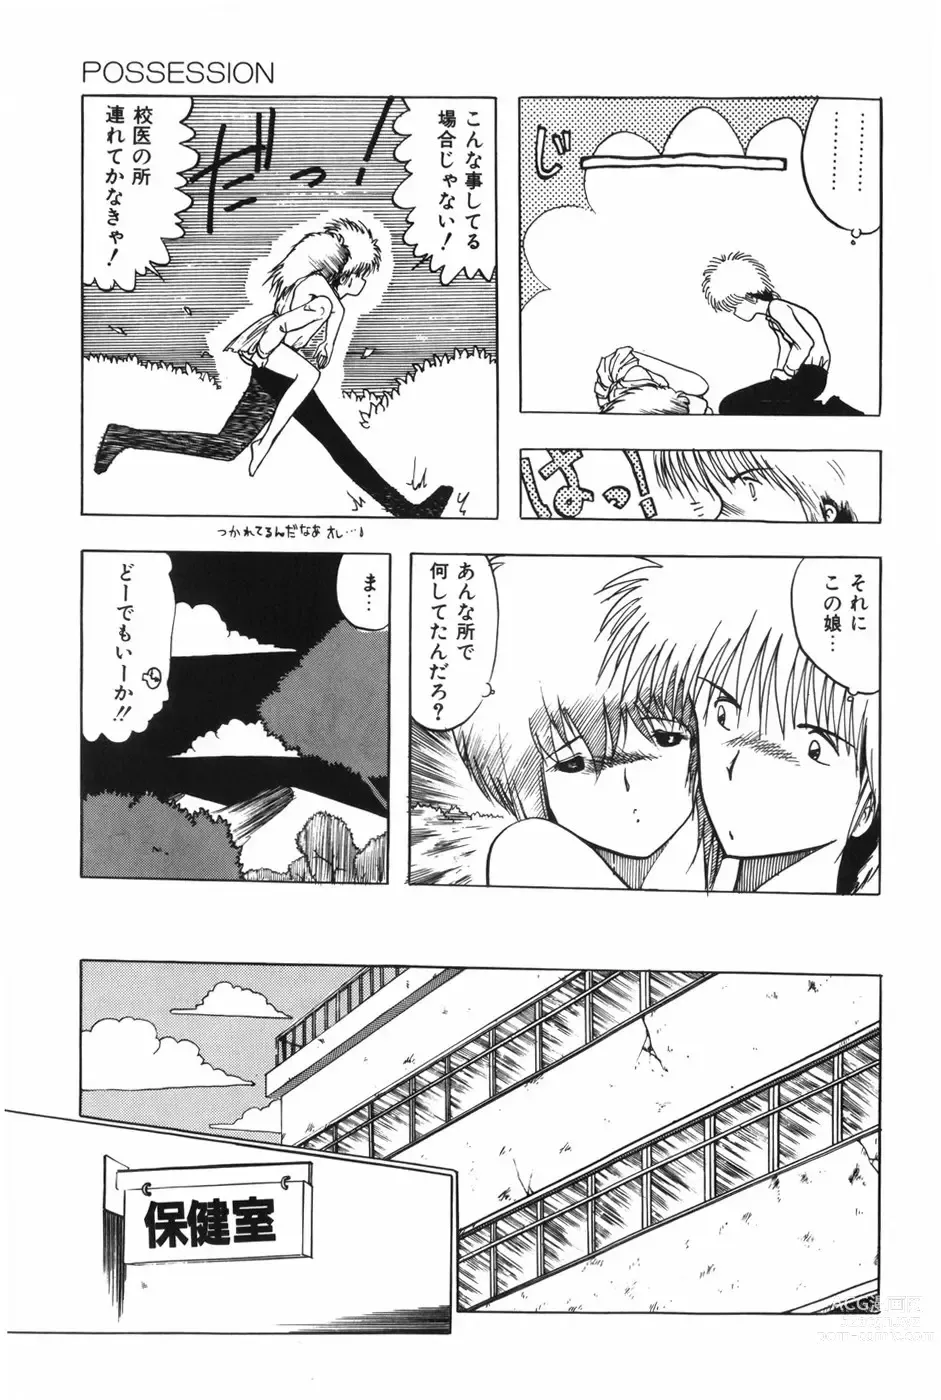 Page 15 of manga POSSESSION